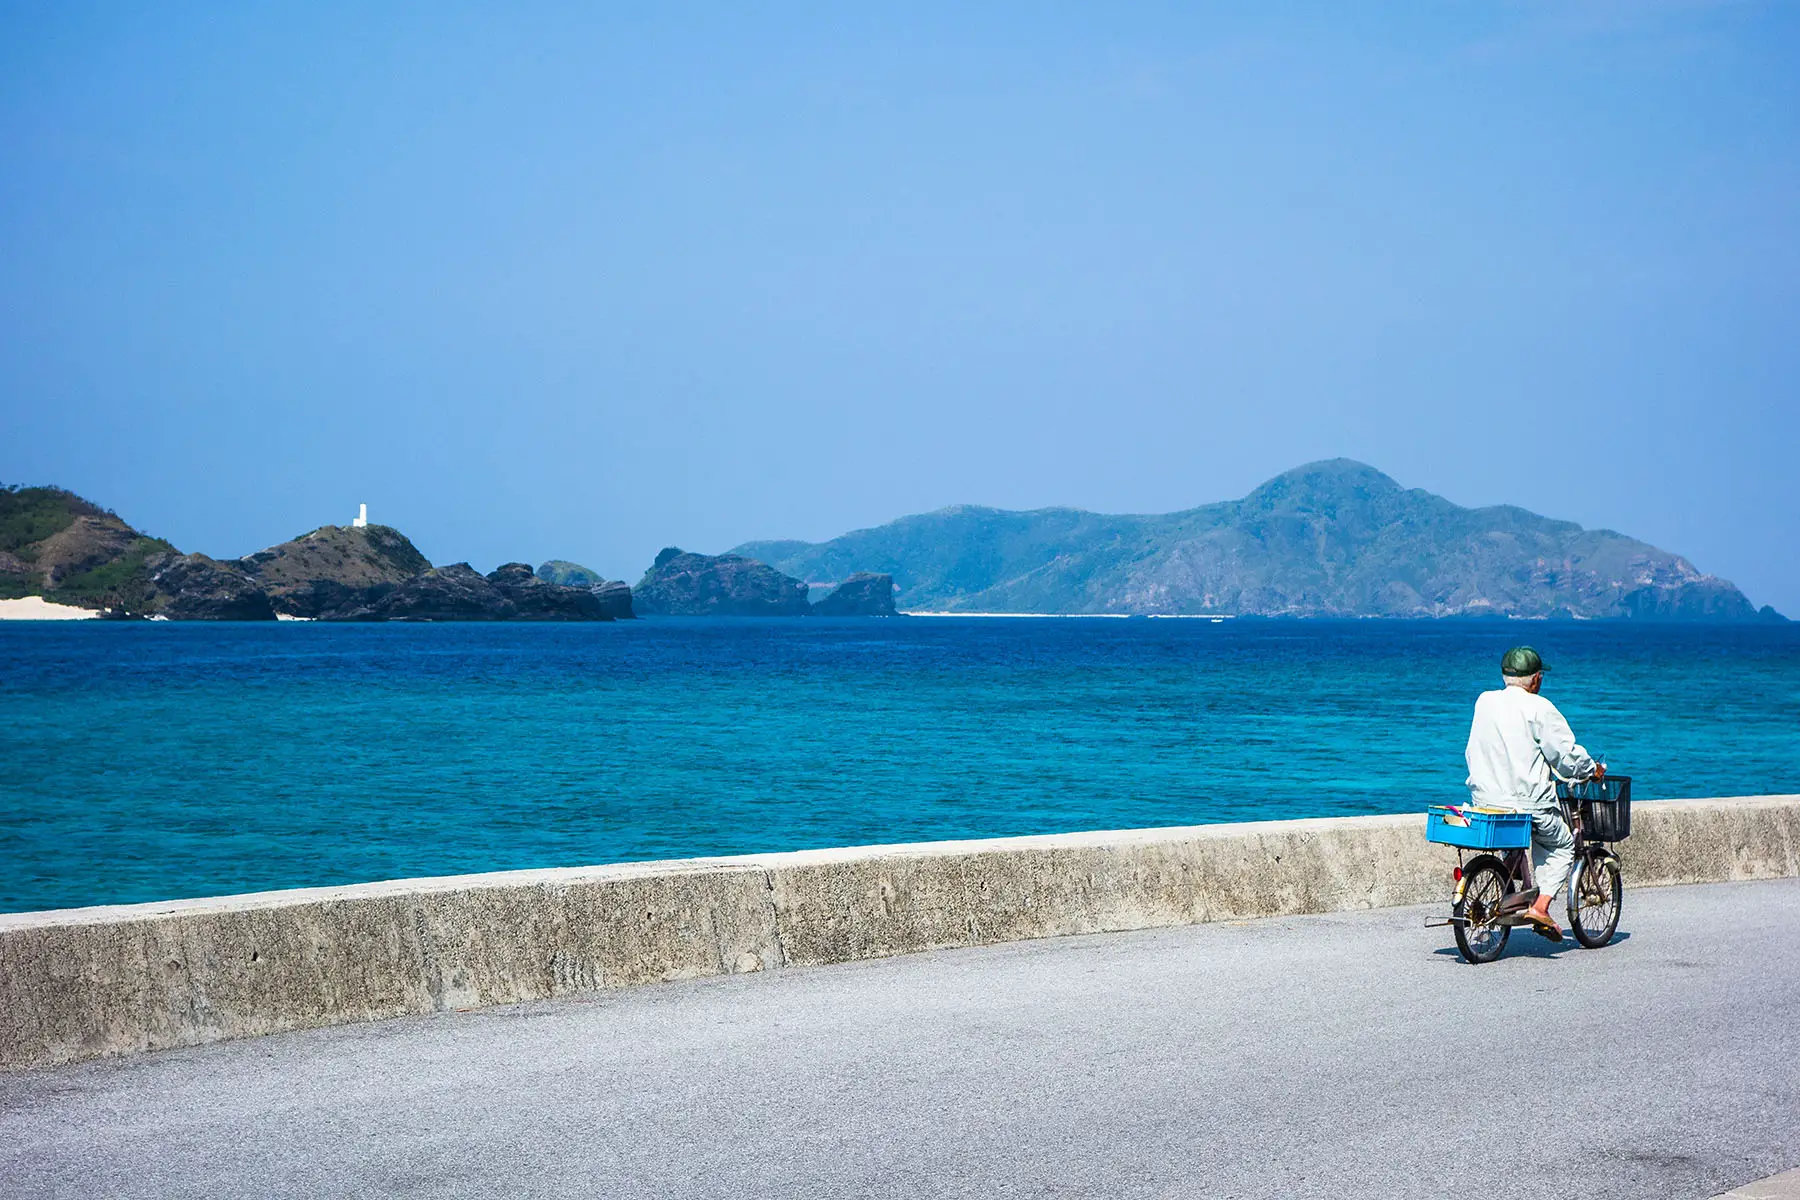 Old man on a bike cycling near the beach front on Okinawa island.